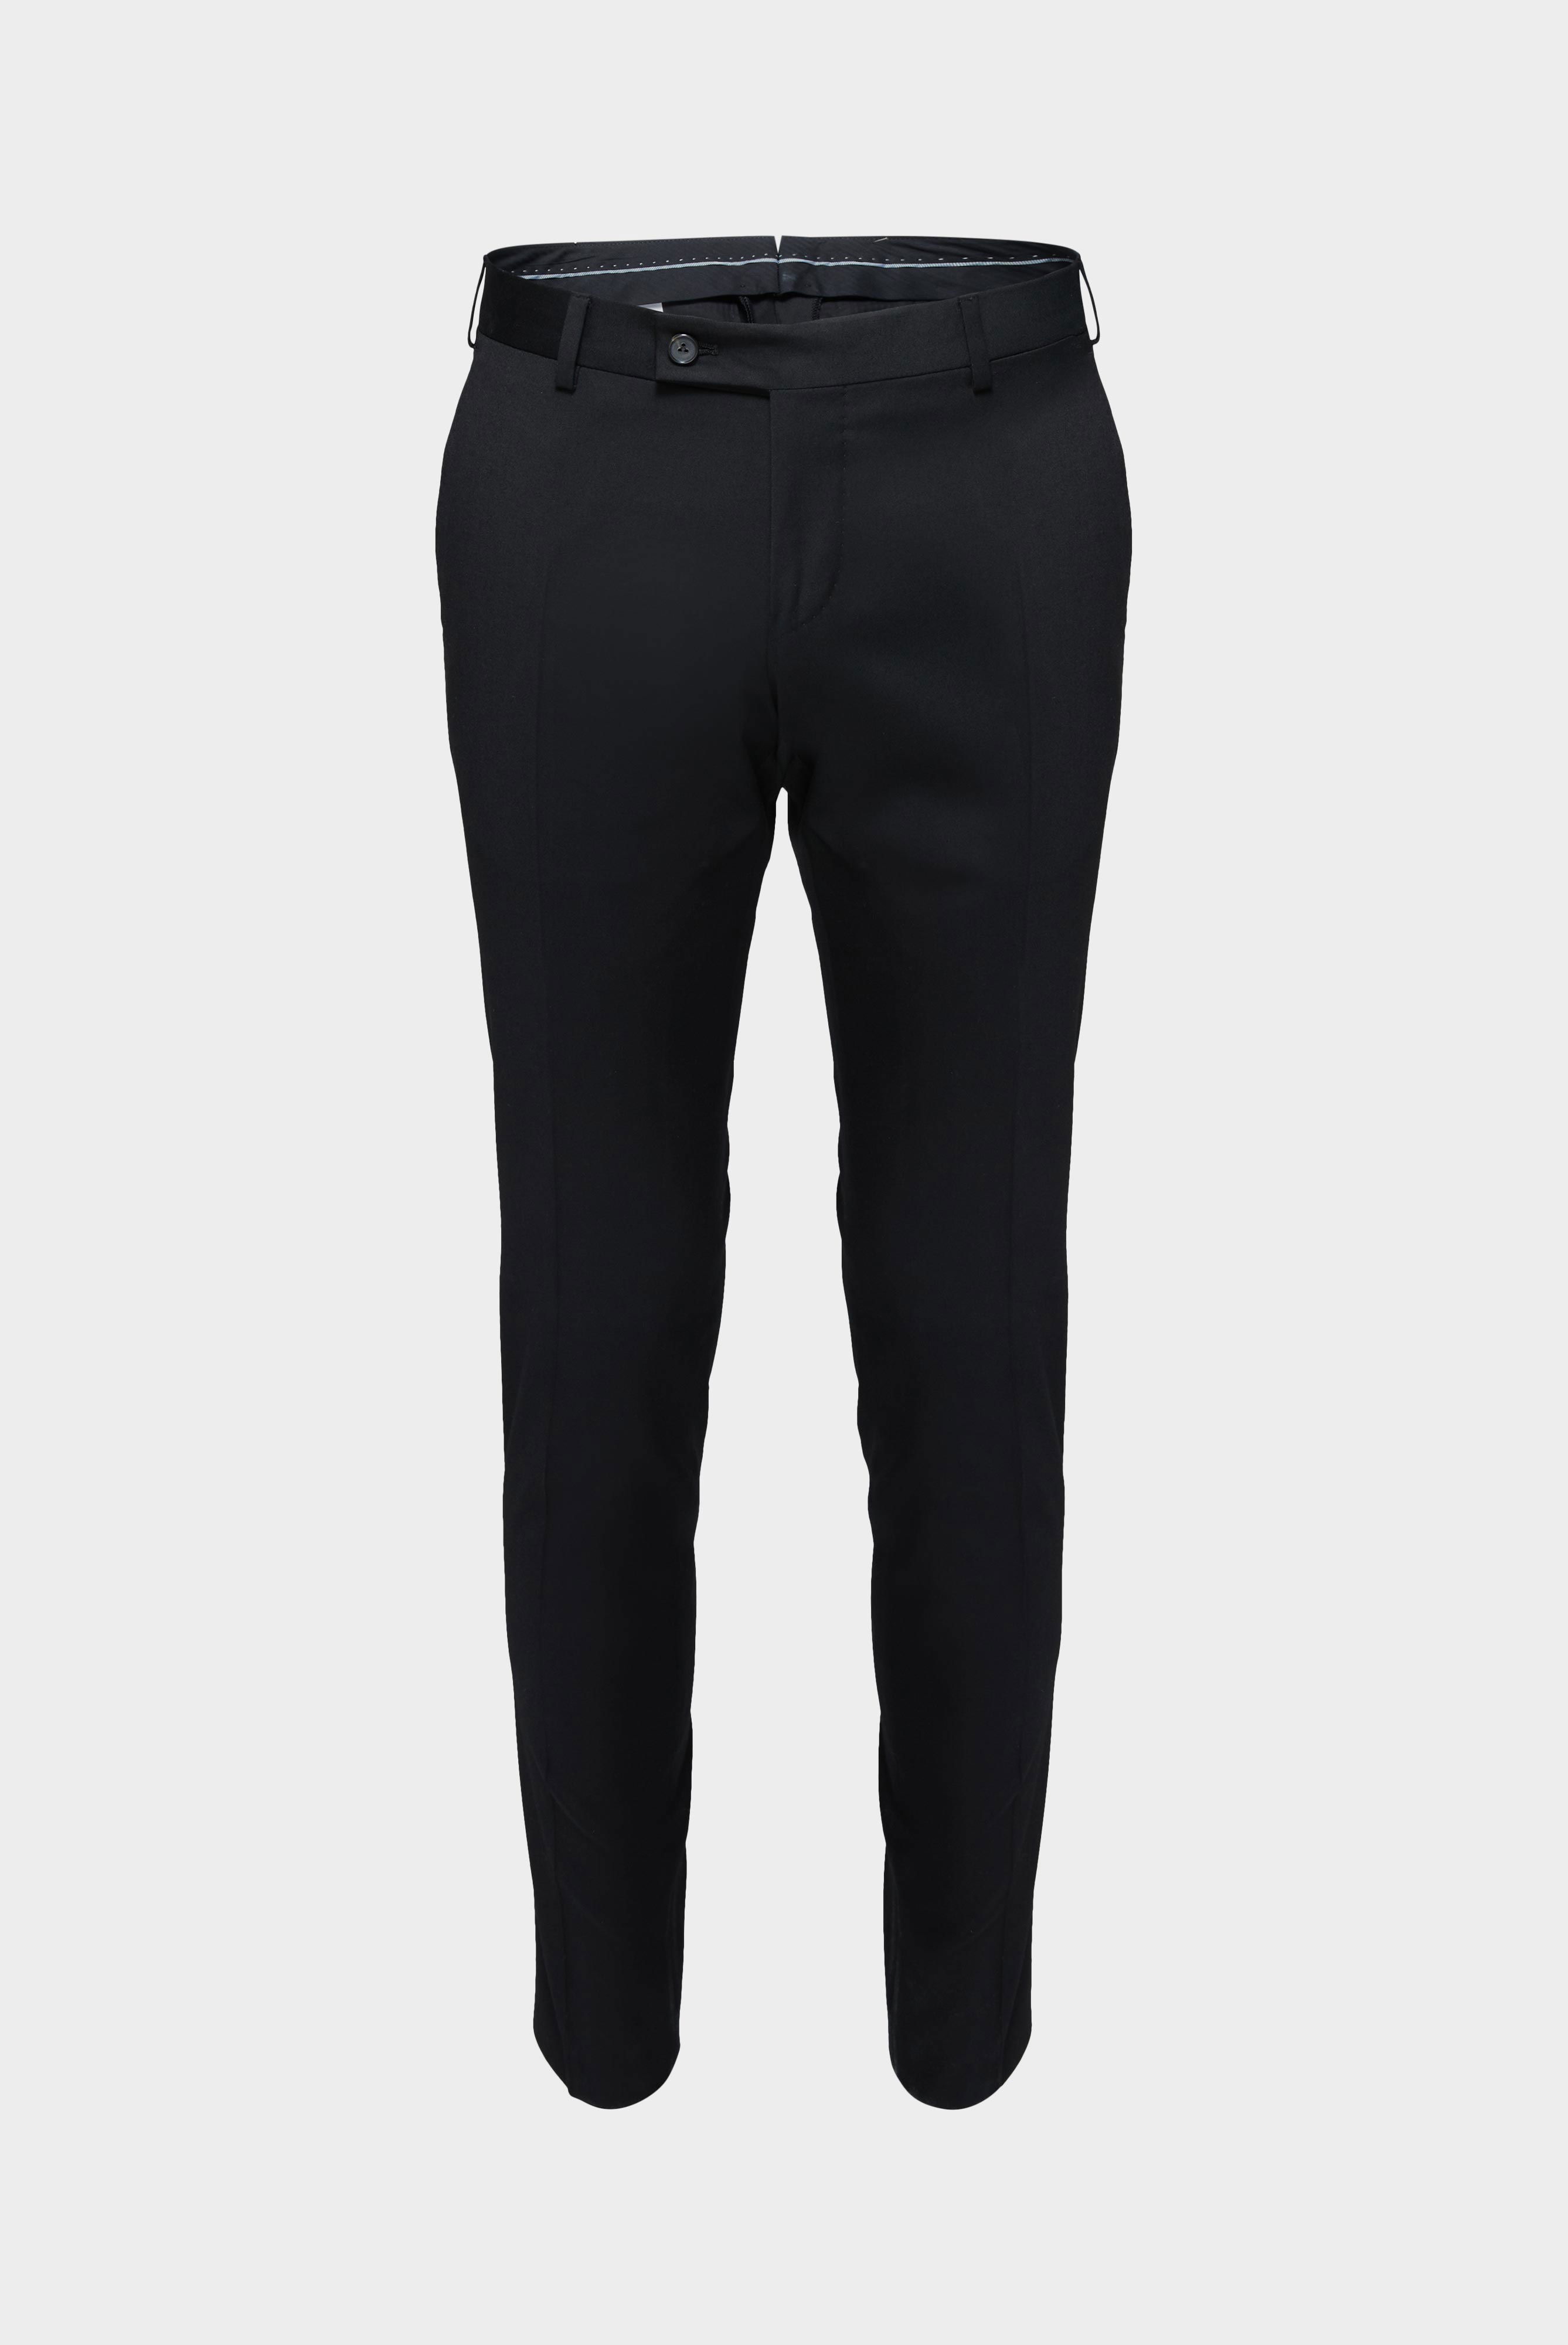 Jeans & Hosen+Hose aus Wolle Slim Fit+20.7880.16.H01010.099.110